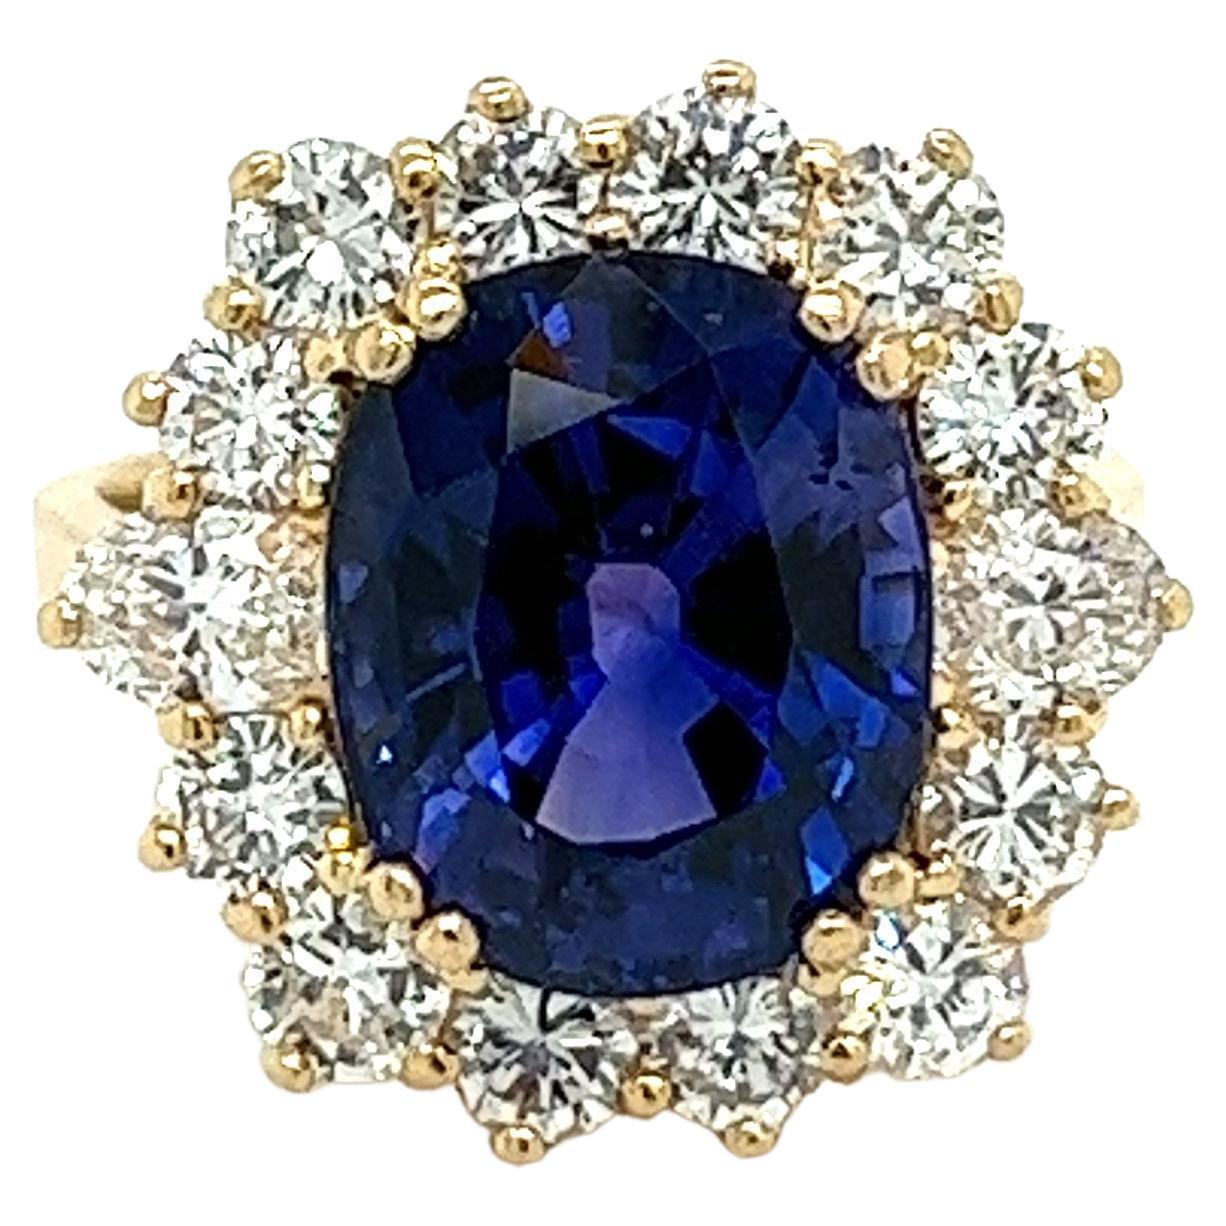 7.2 Carat Oval Cut Blue Sapphire & Diamond Halo Ring in 14K Yellow Gold